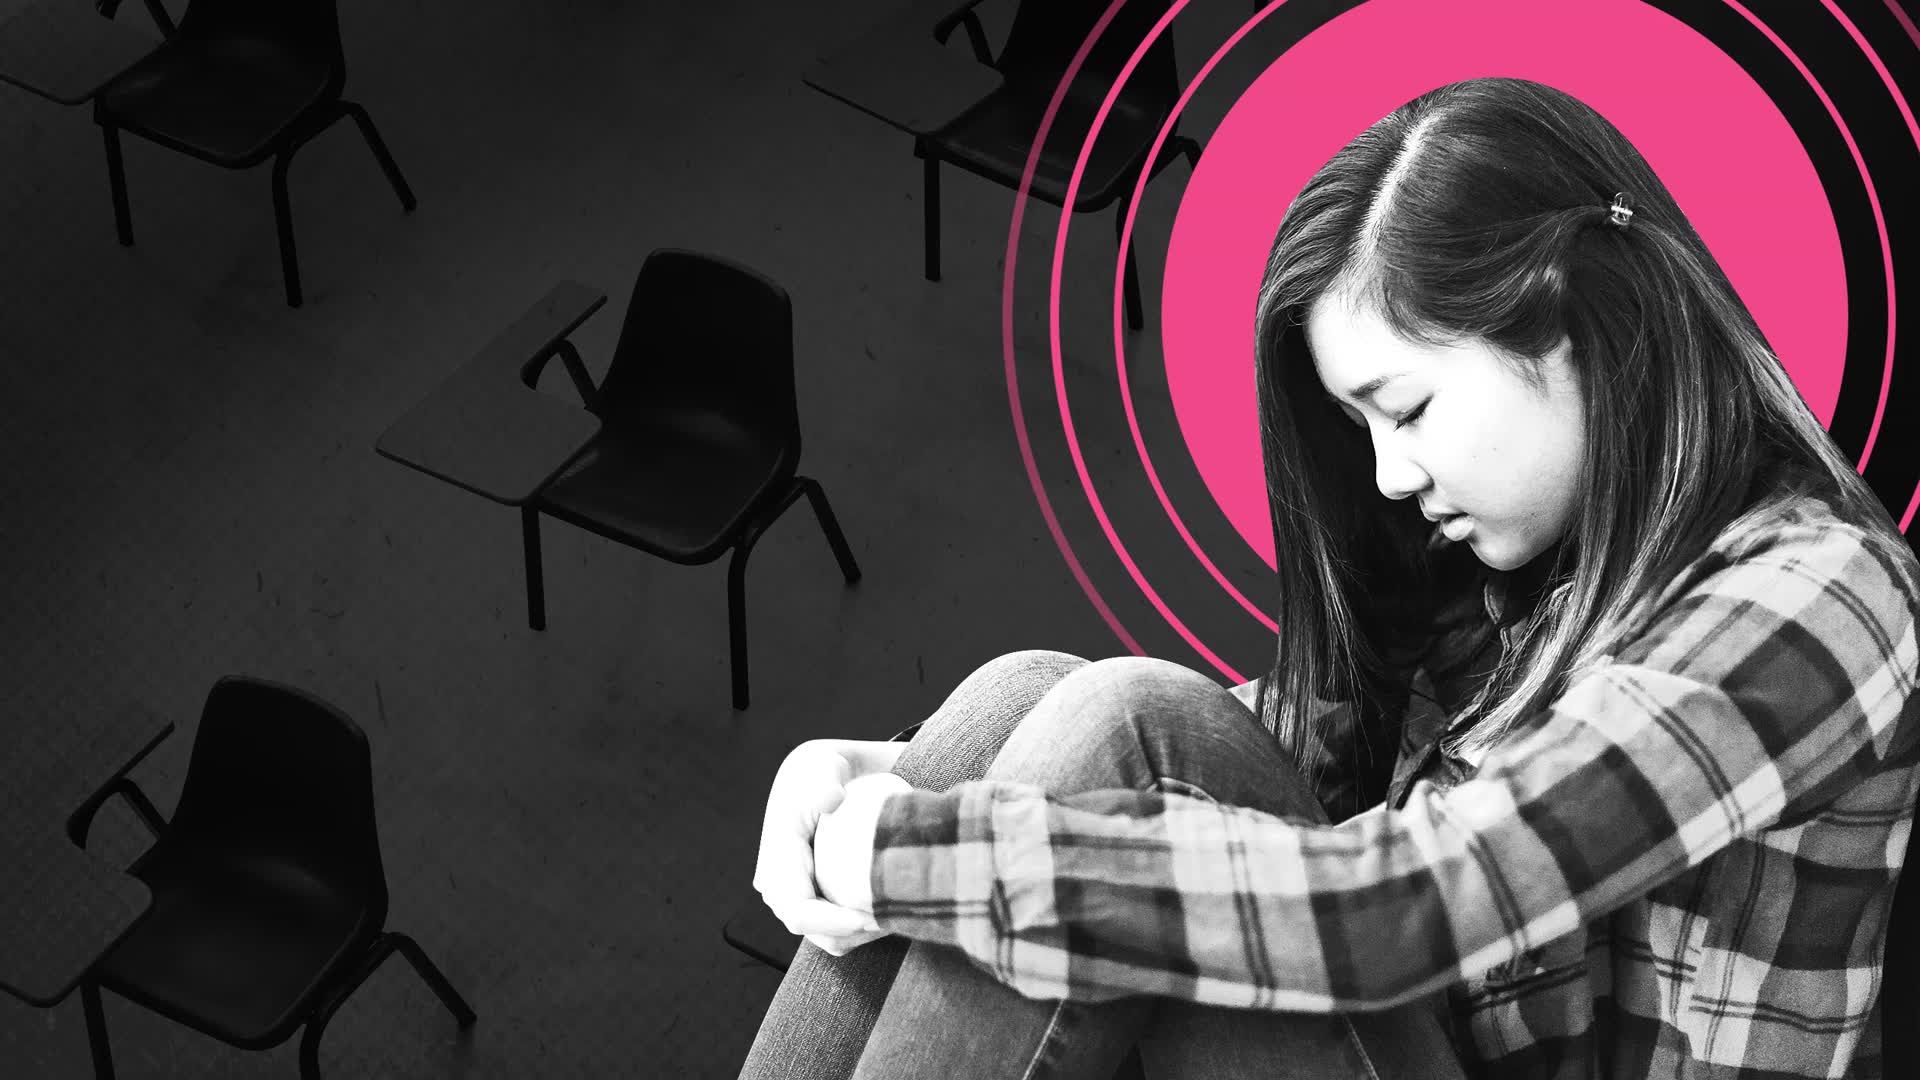 Www Xxx School Com - Sexual Harassment in School - Real Girls Share Experiences Of Sexual  Assault in School